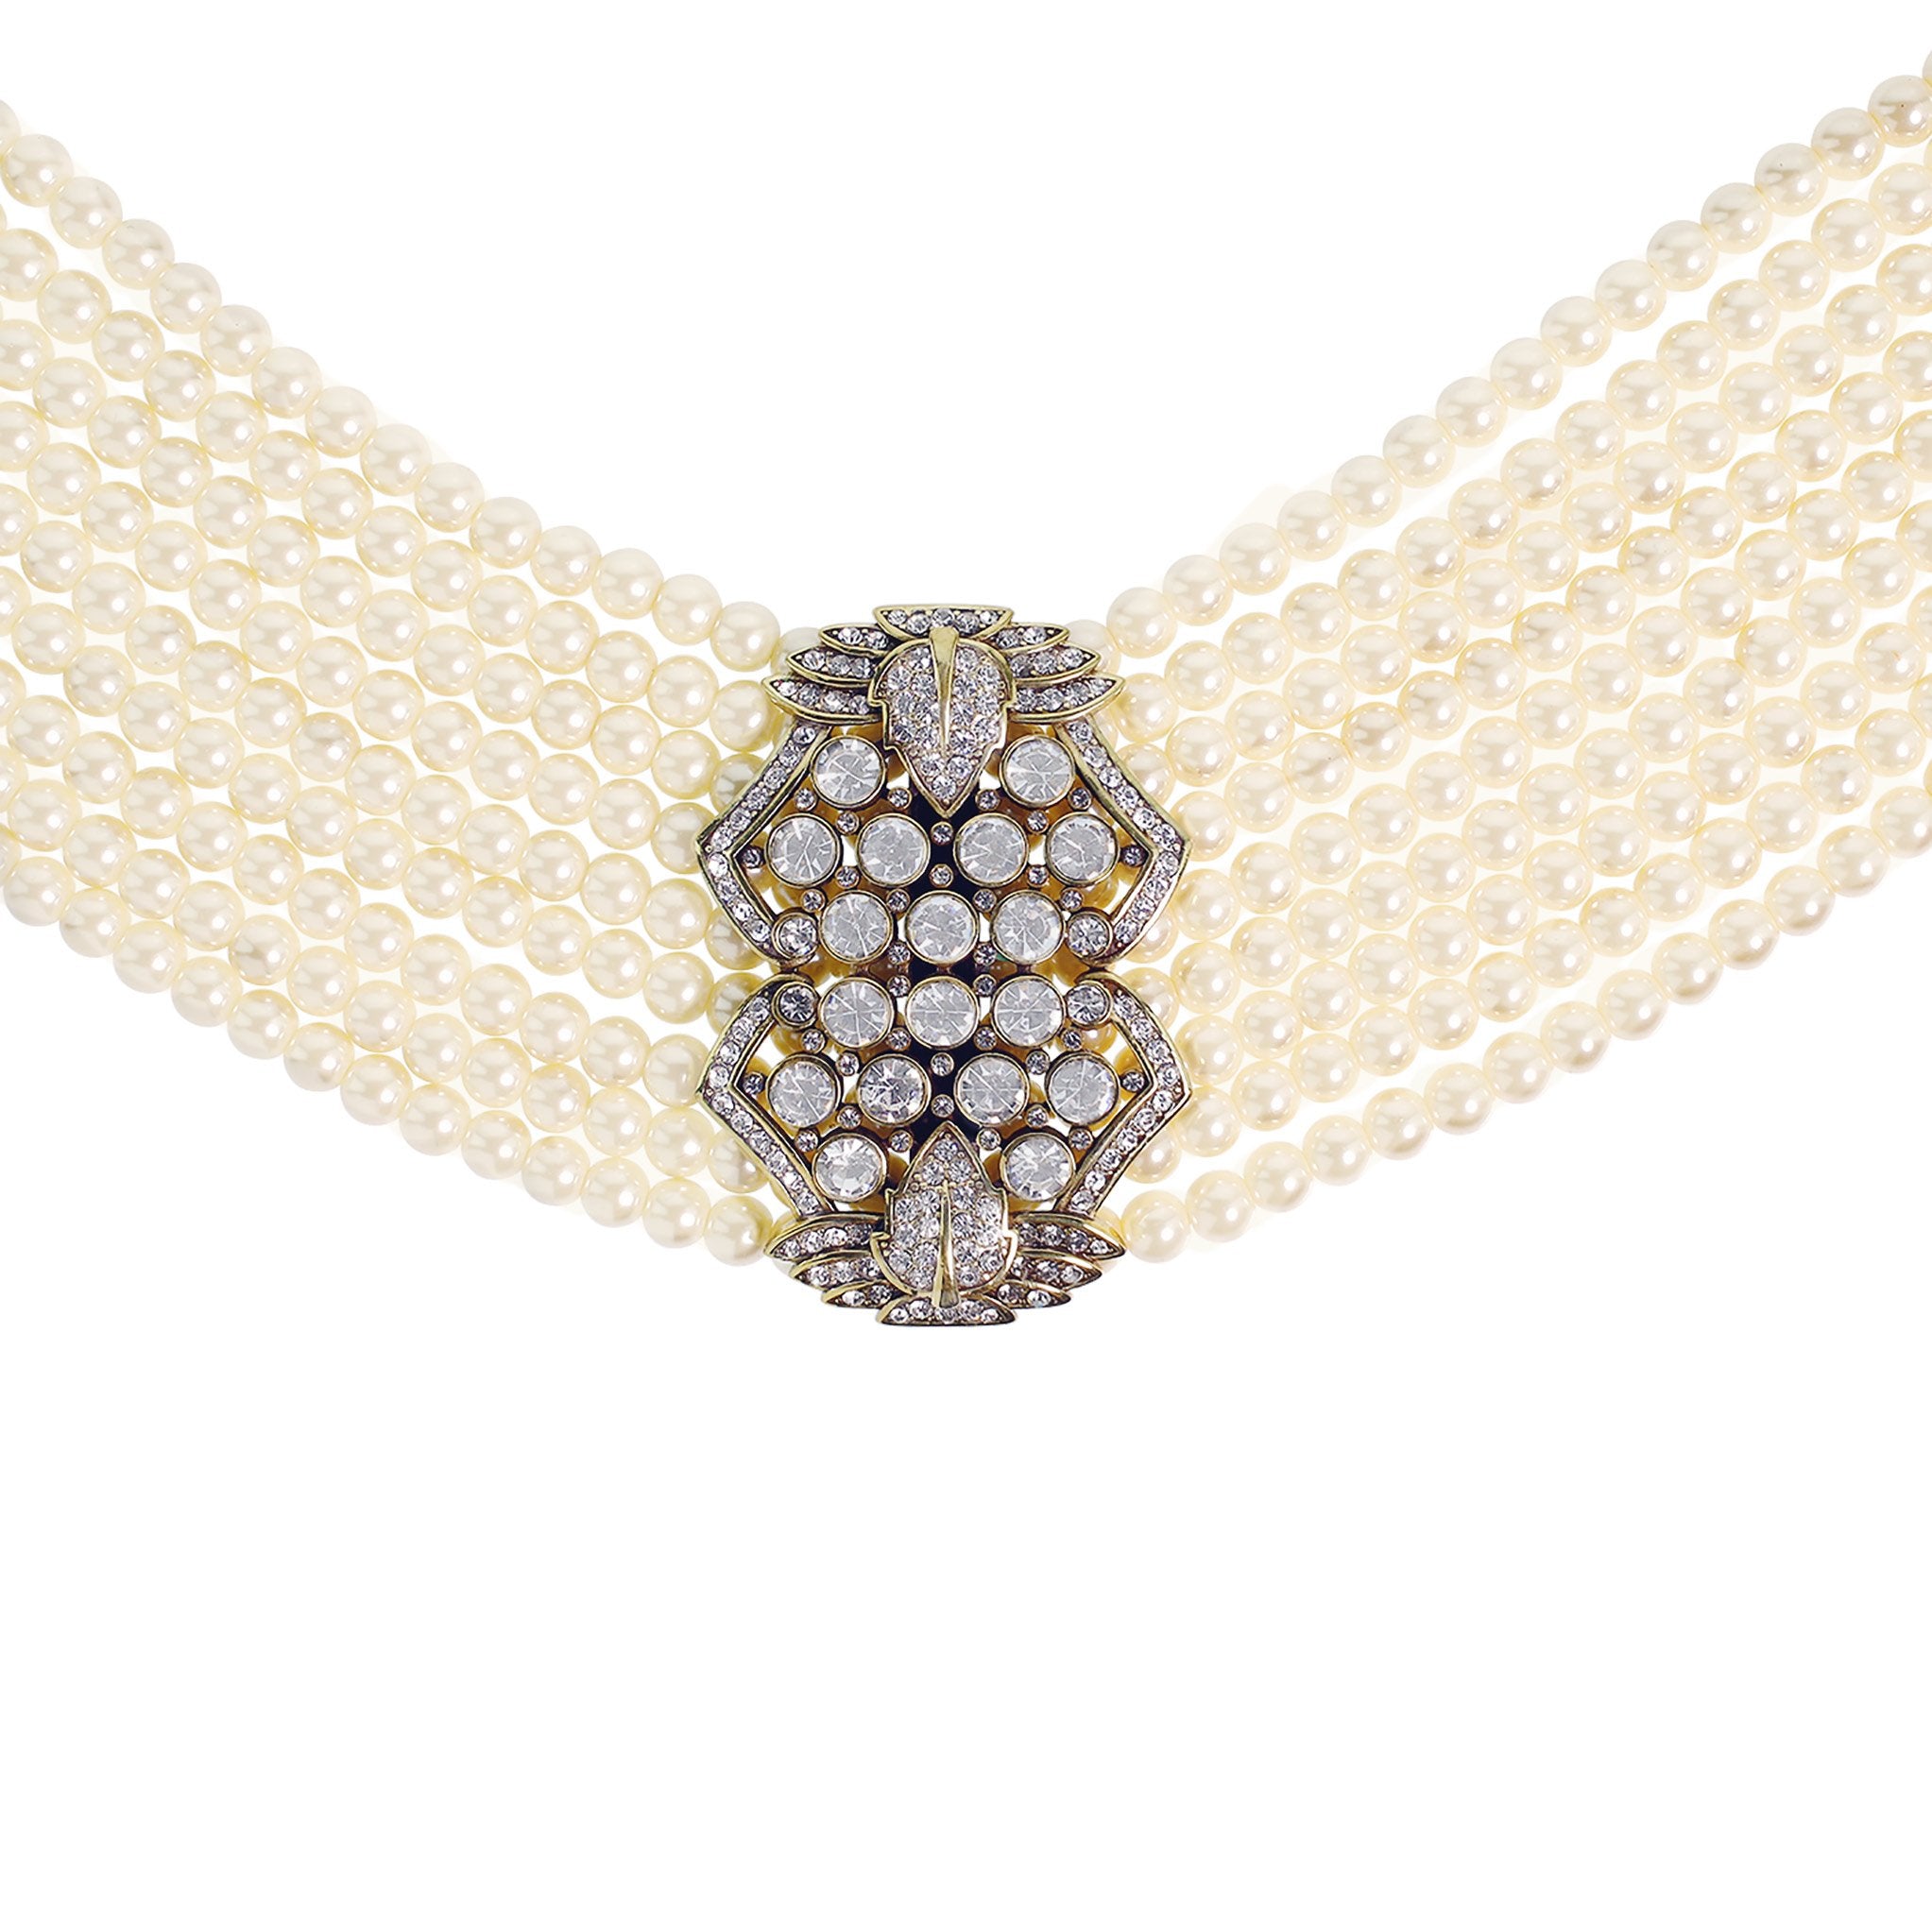 HEIDI DAUS "Haulting Glamour" Beaded Crystal Necklace